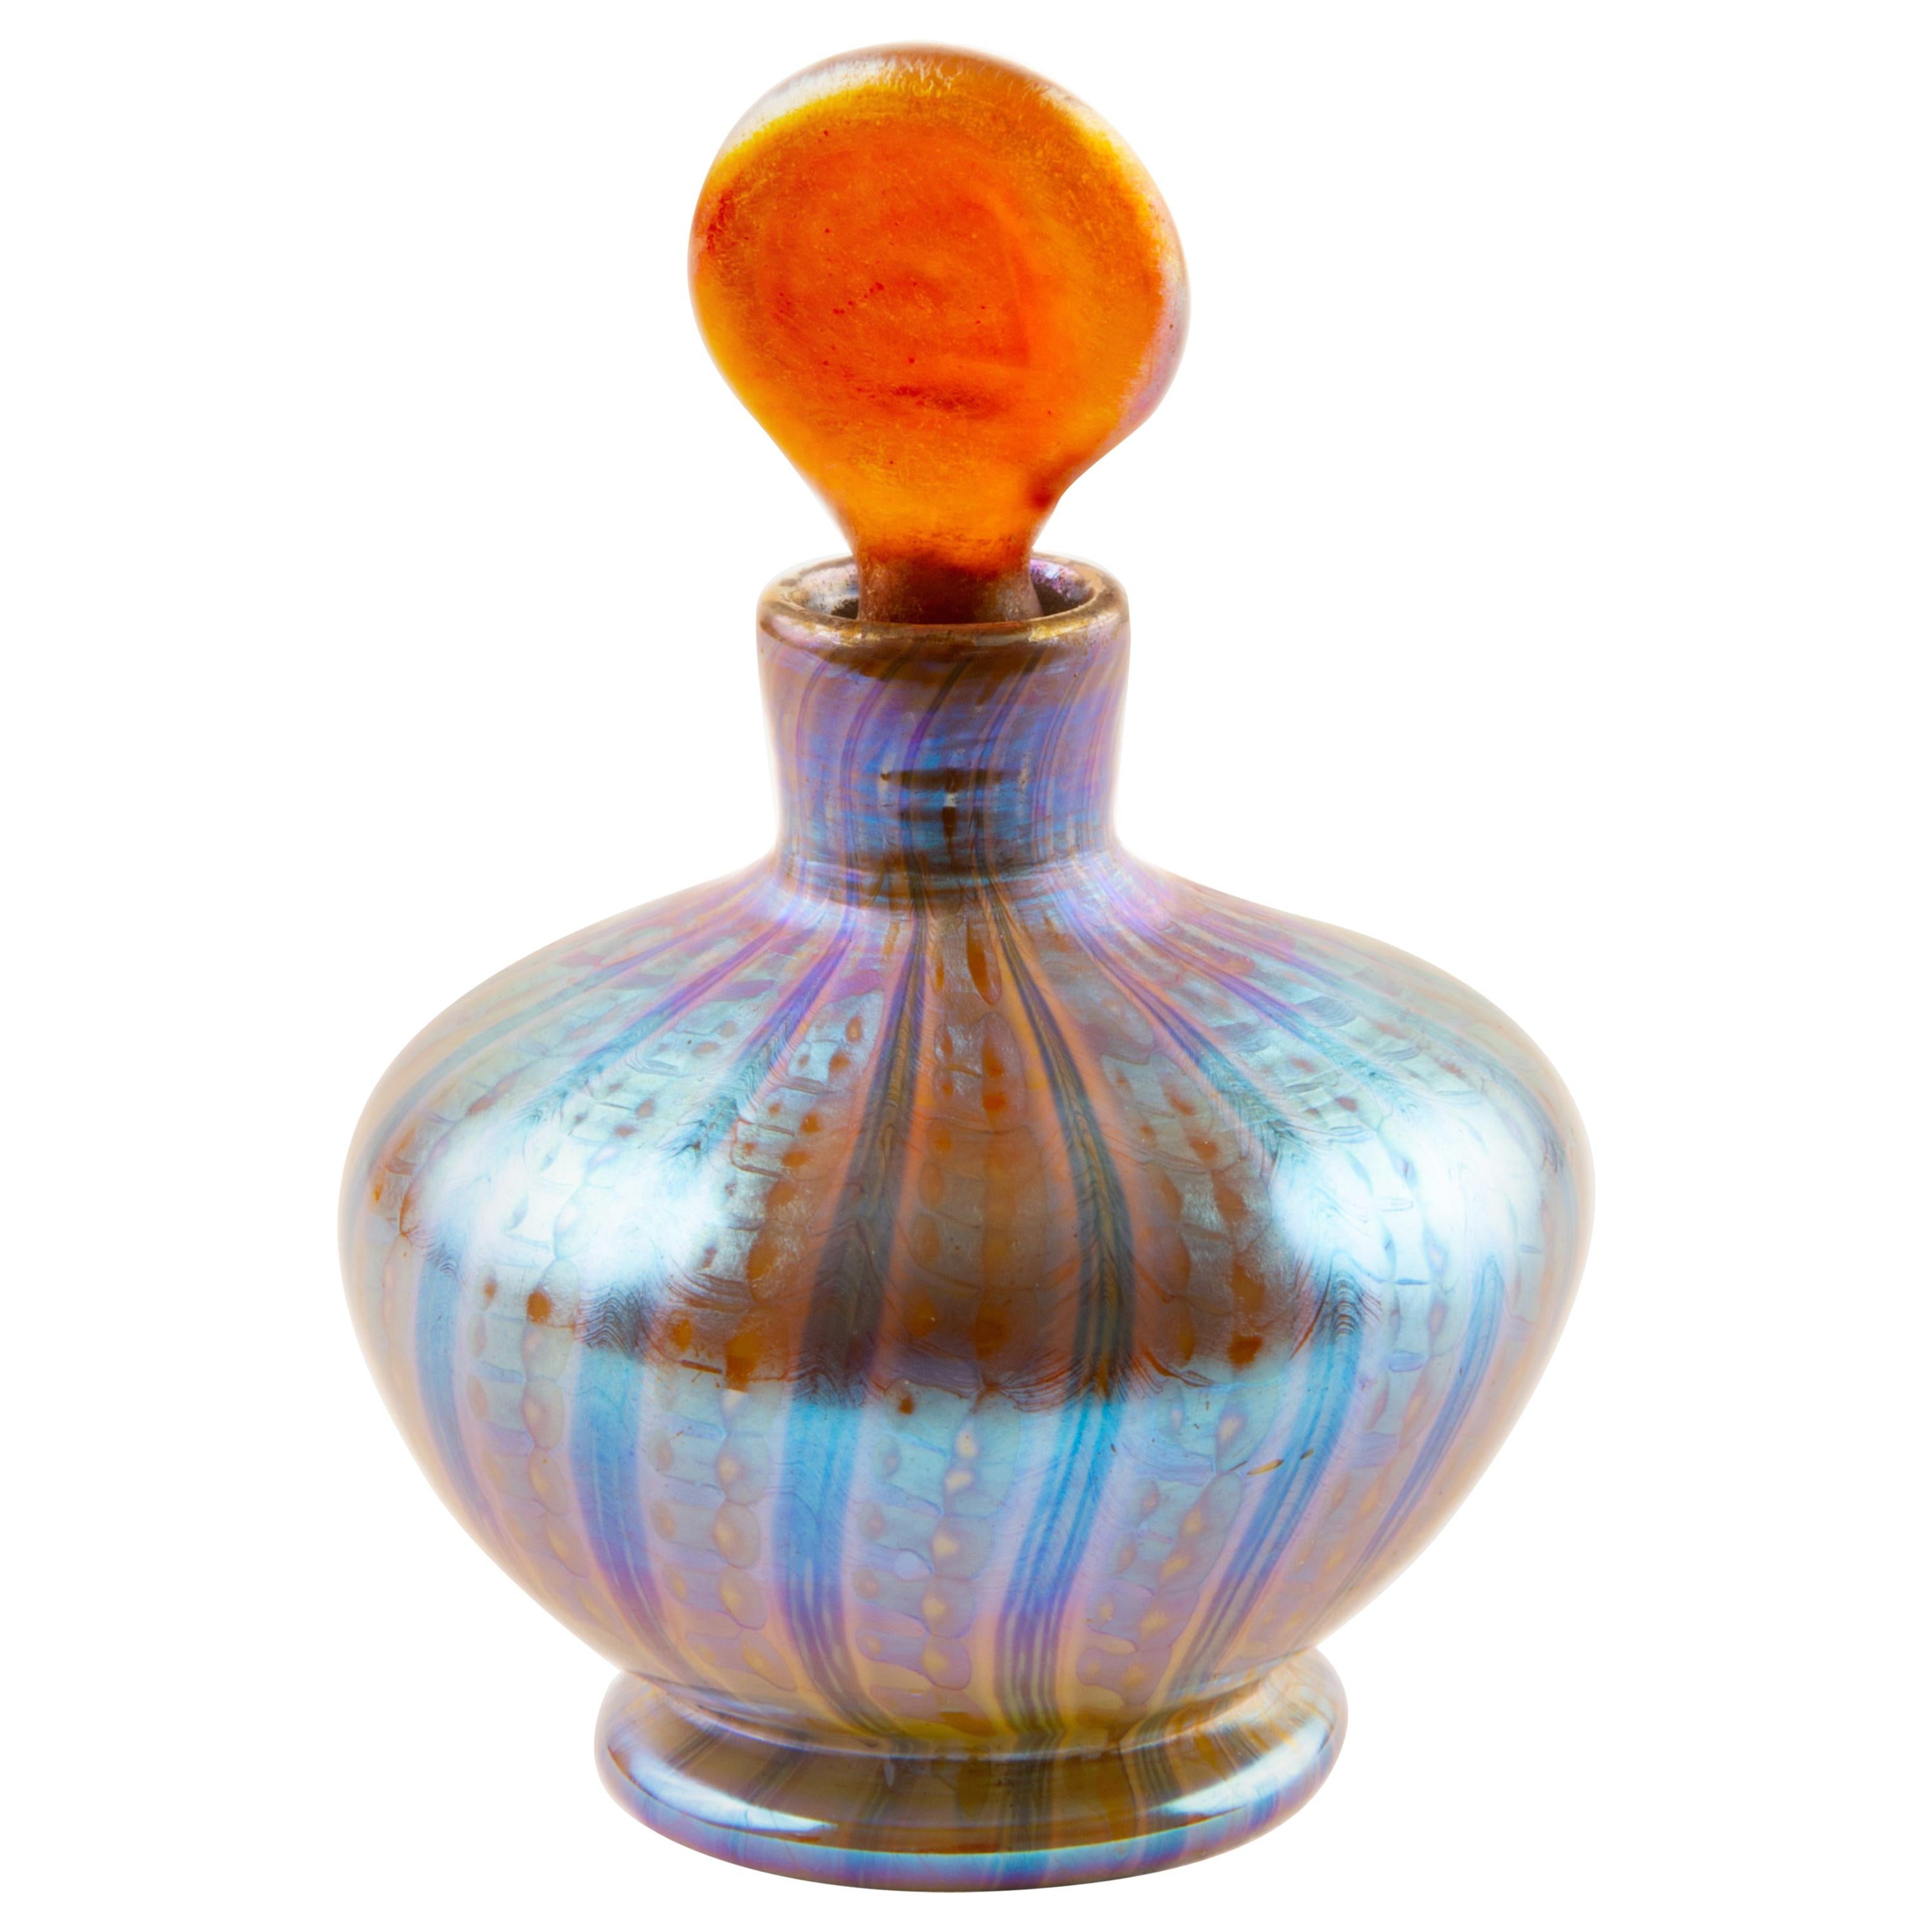 Art Nouveau Tiffany Favrile "Agate" Perfume Bottle by, Tiffany Studios